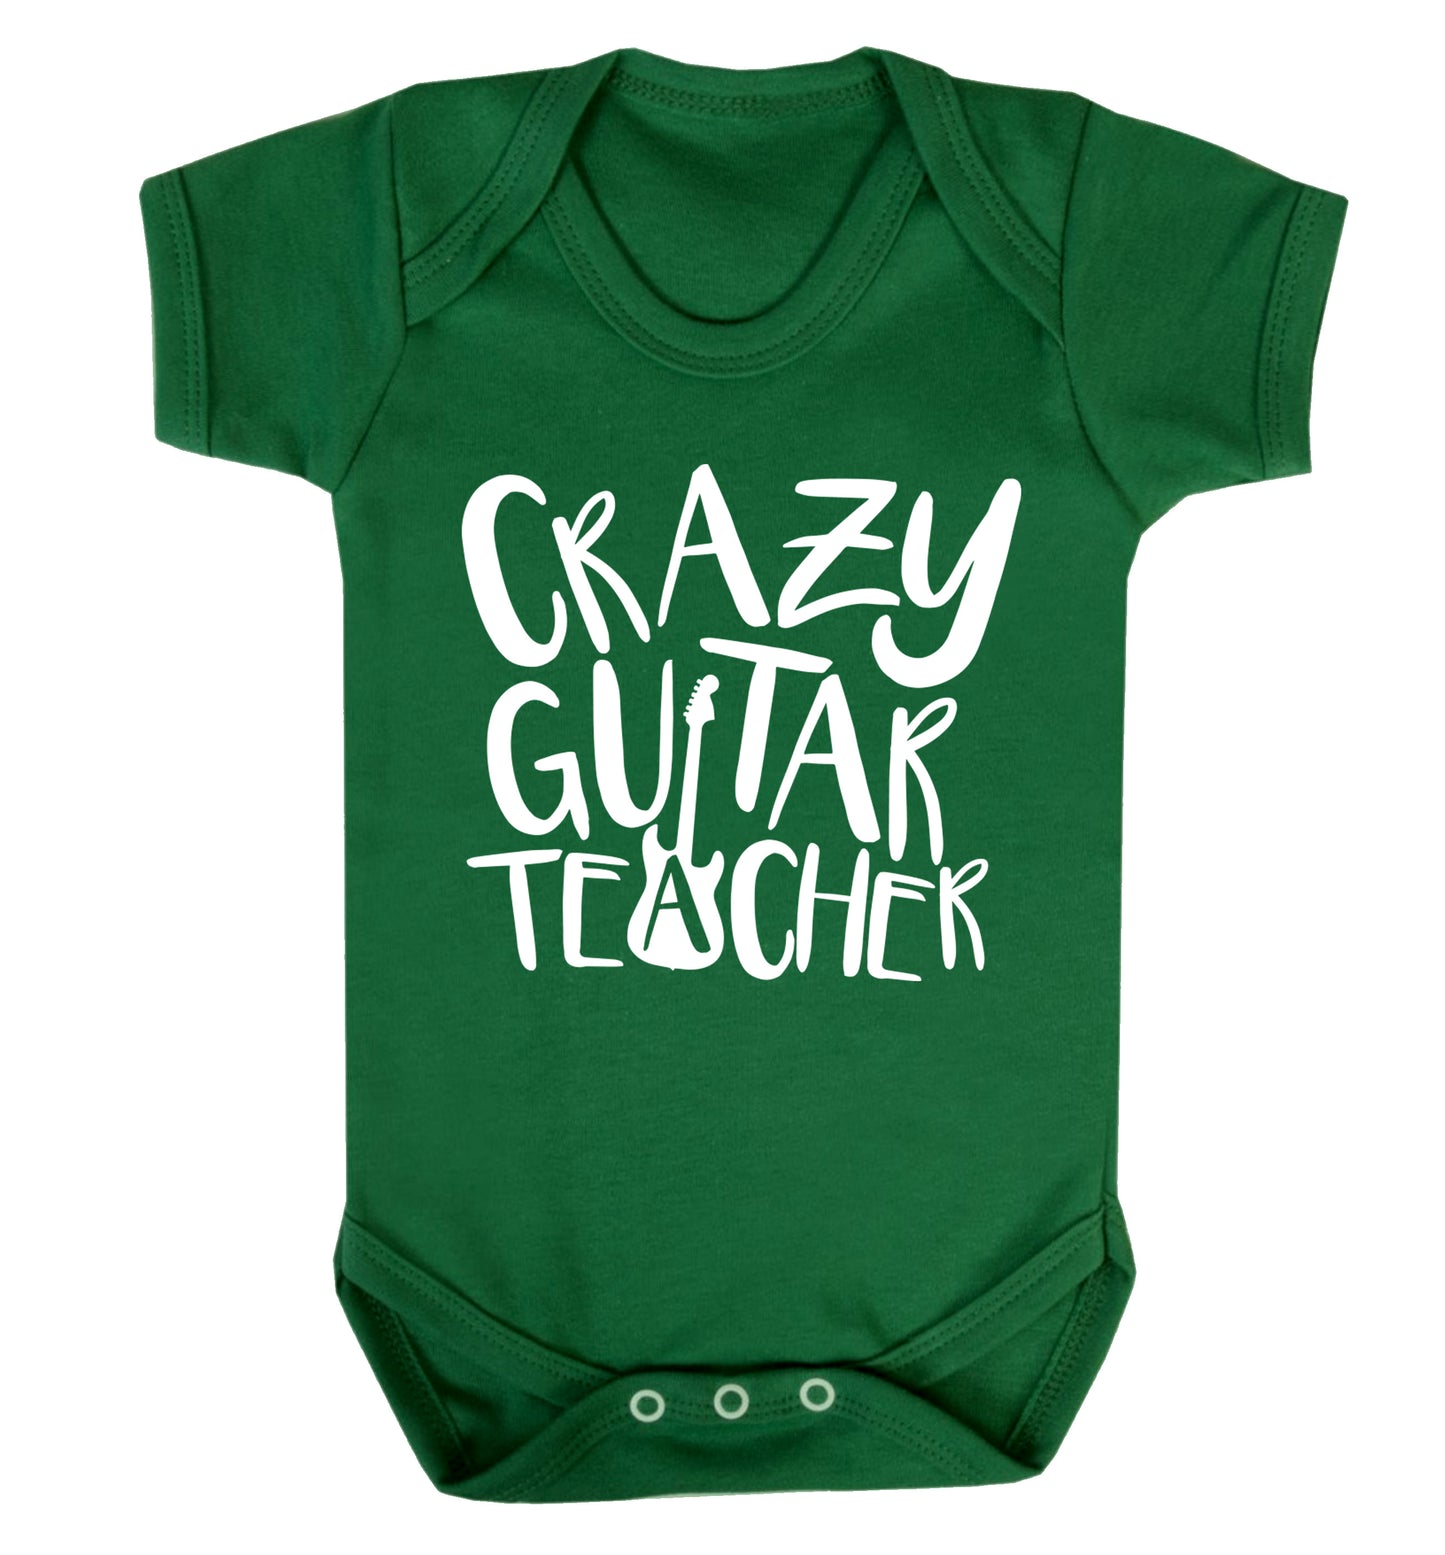 Crazy guitar teacher Baby Vest green 18-24 months